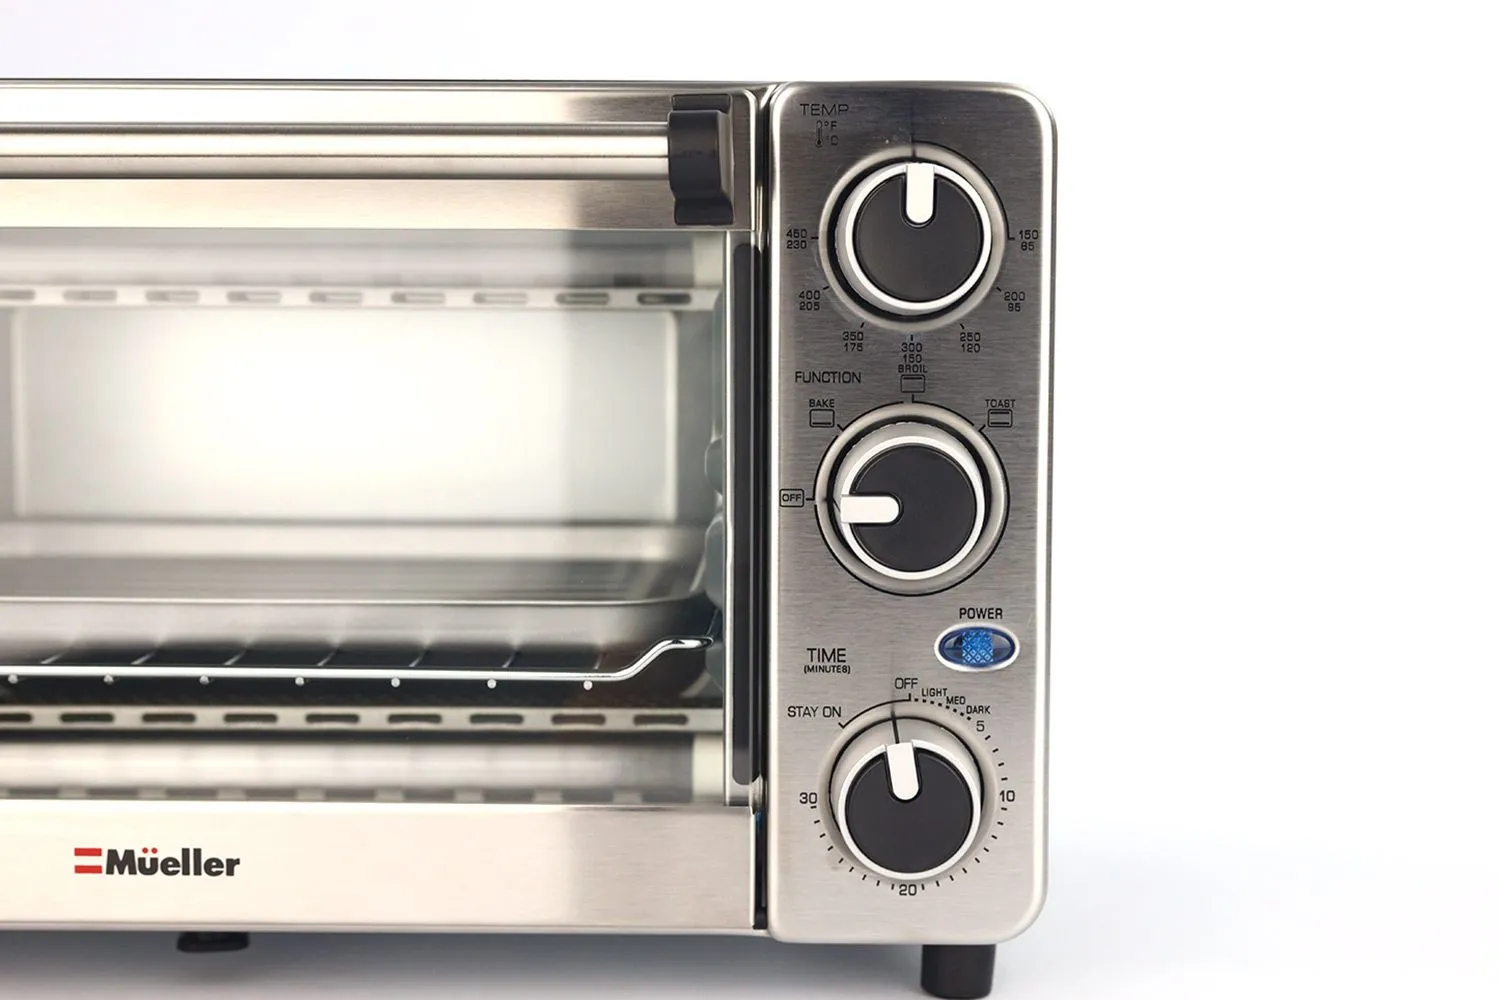 Mueller Austria Toaster Oven 4 Slice, Multi-function Stainless